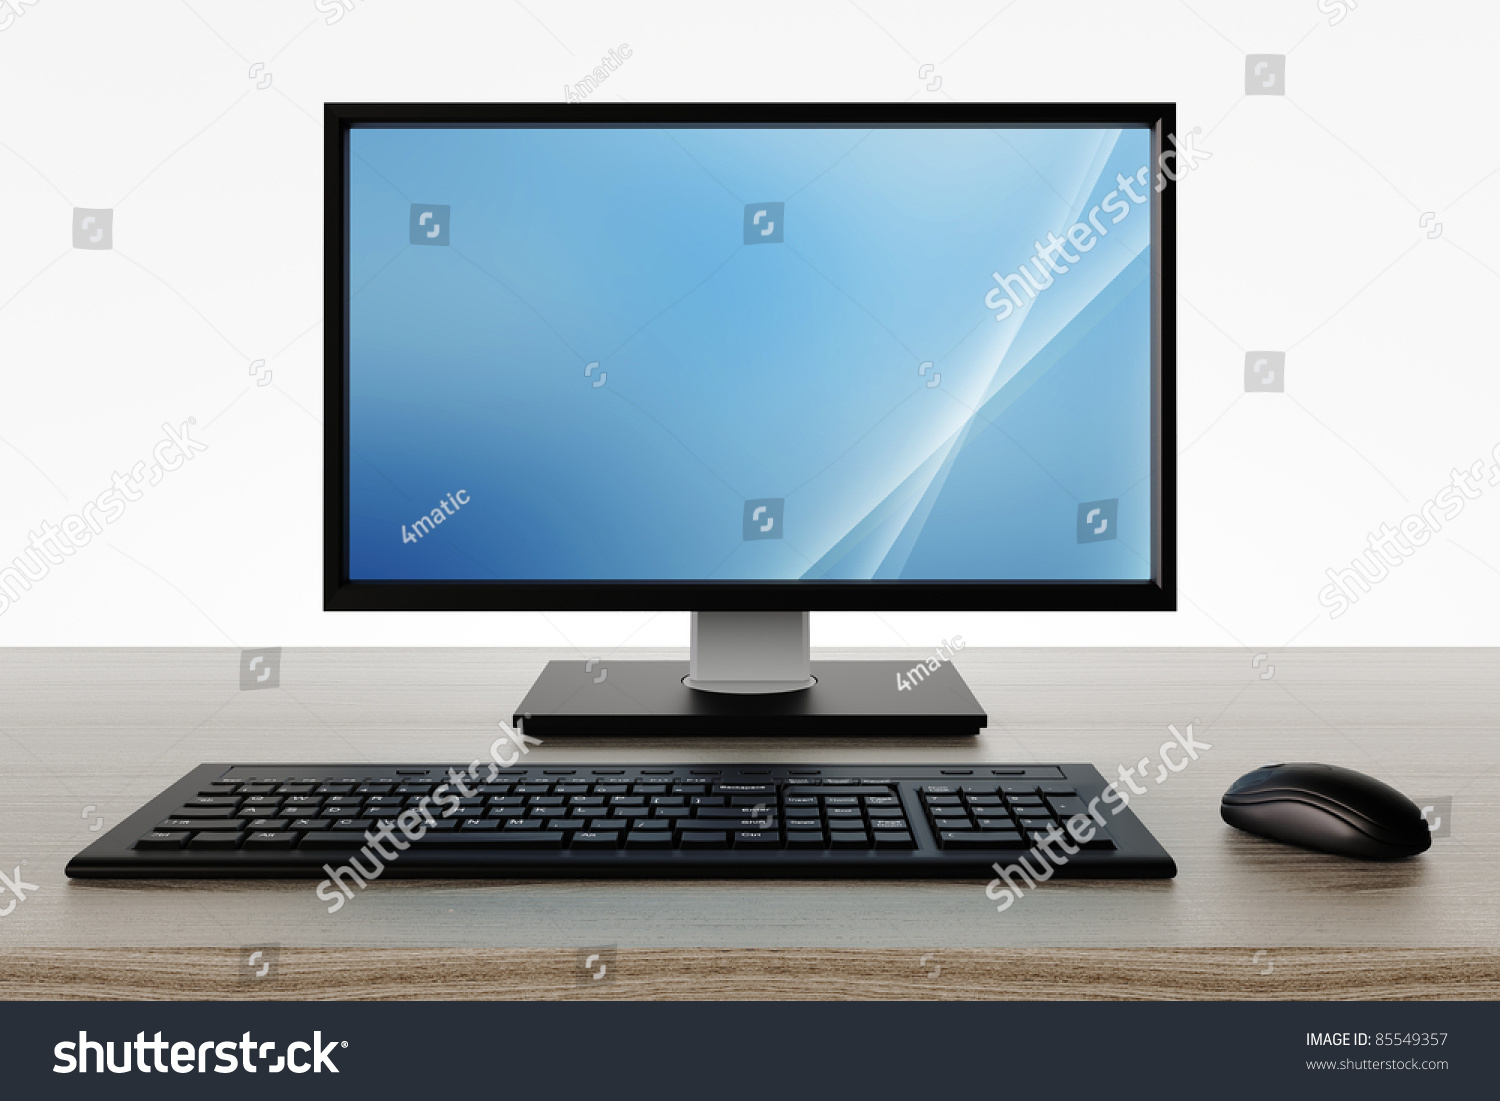 Computer day. Монитор клавиатура мышь. Монитор для компьютера. Монитор с клавиатурой. Монитор с клавиатурой и мышкой.